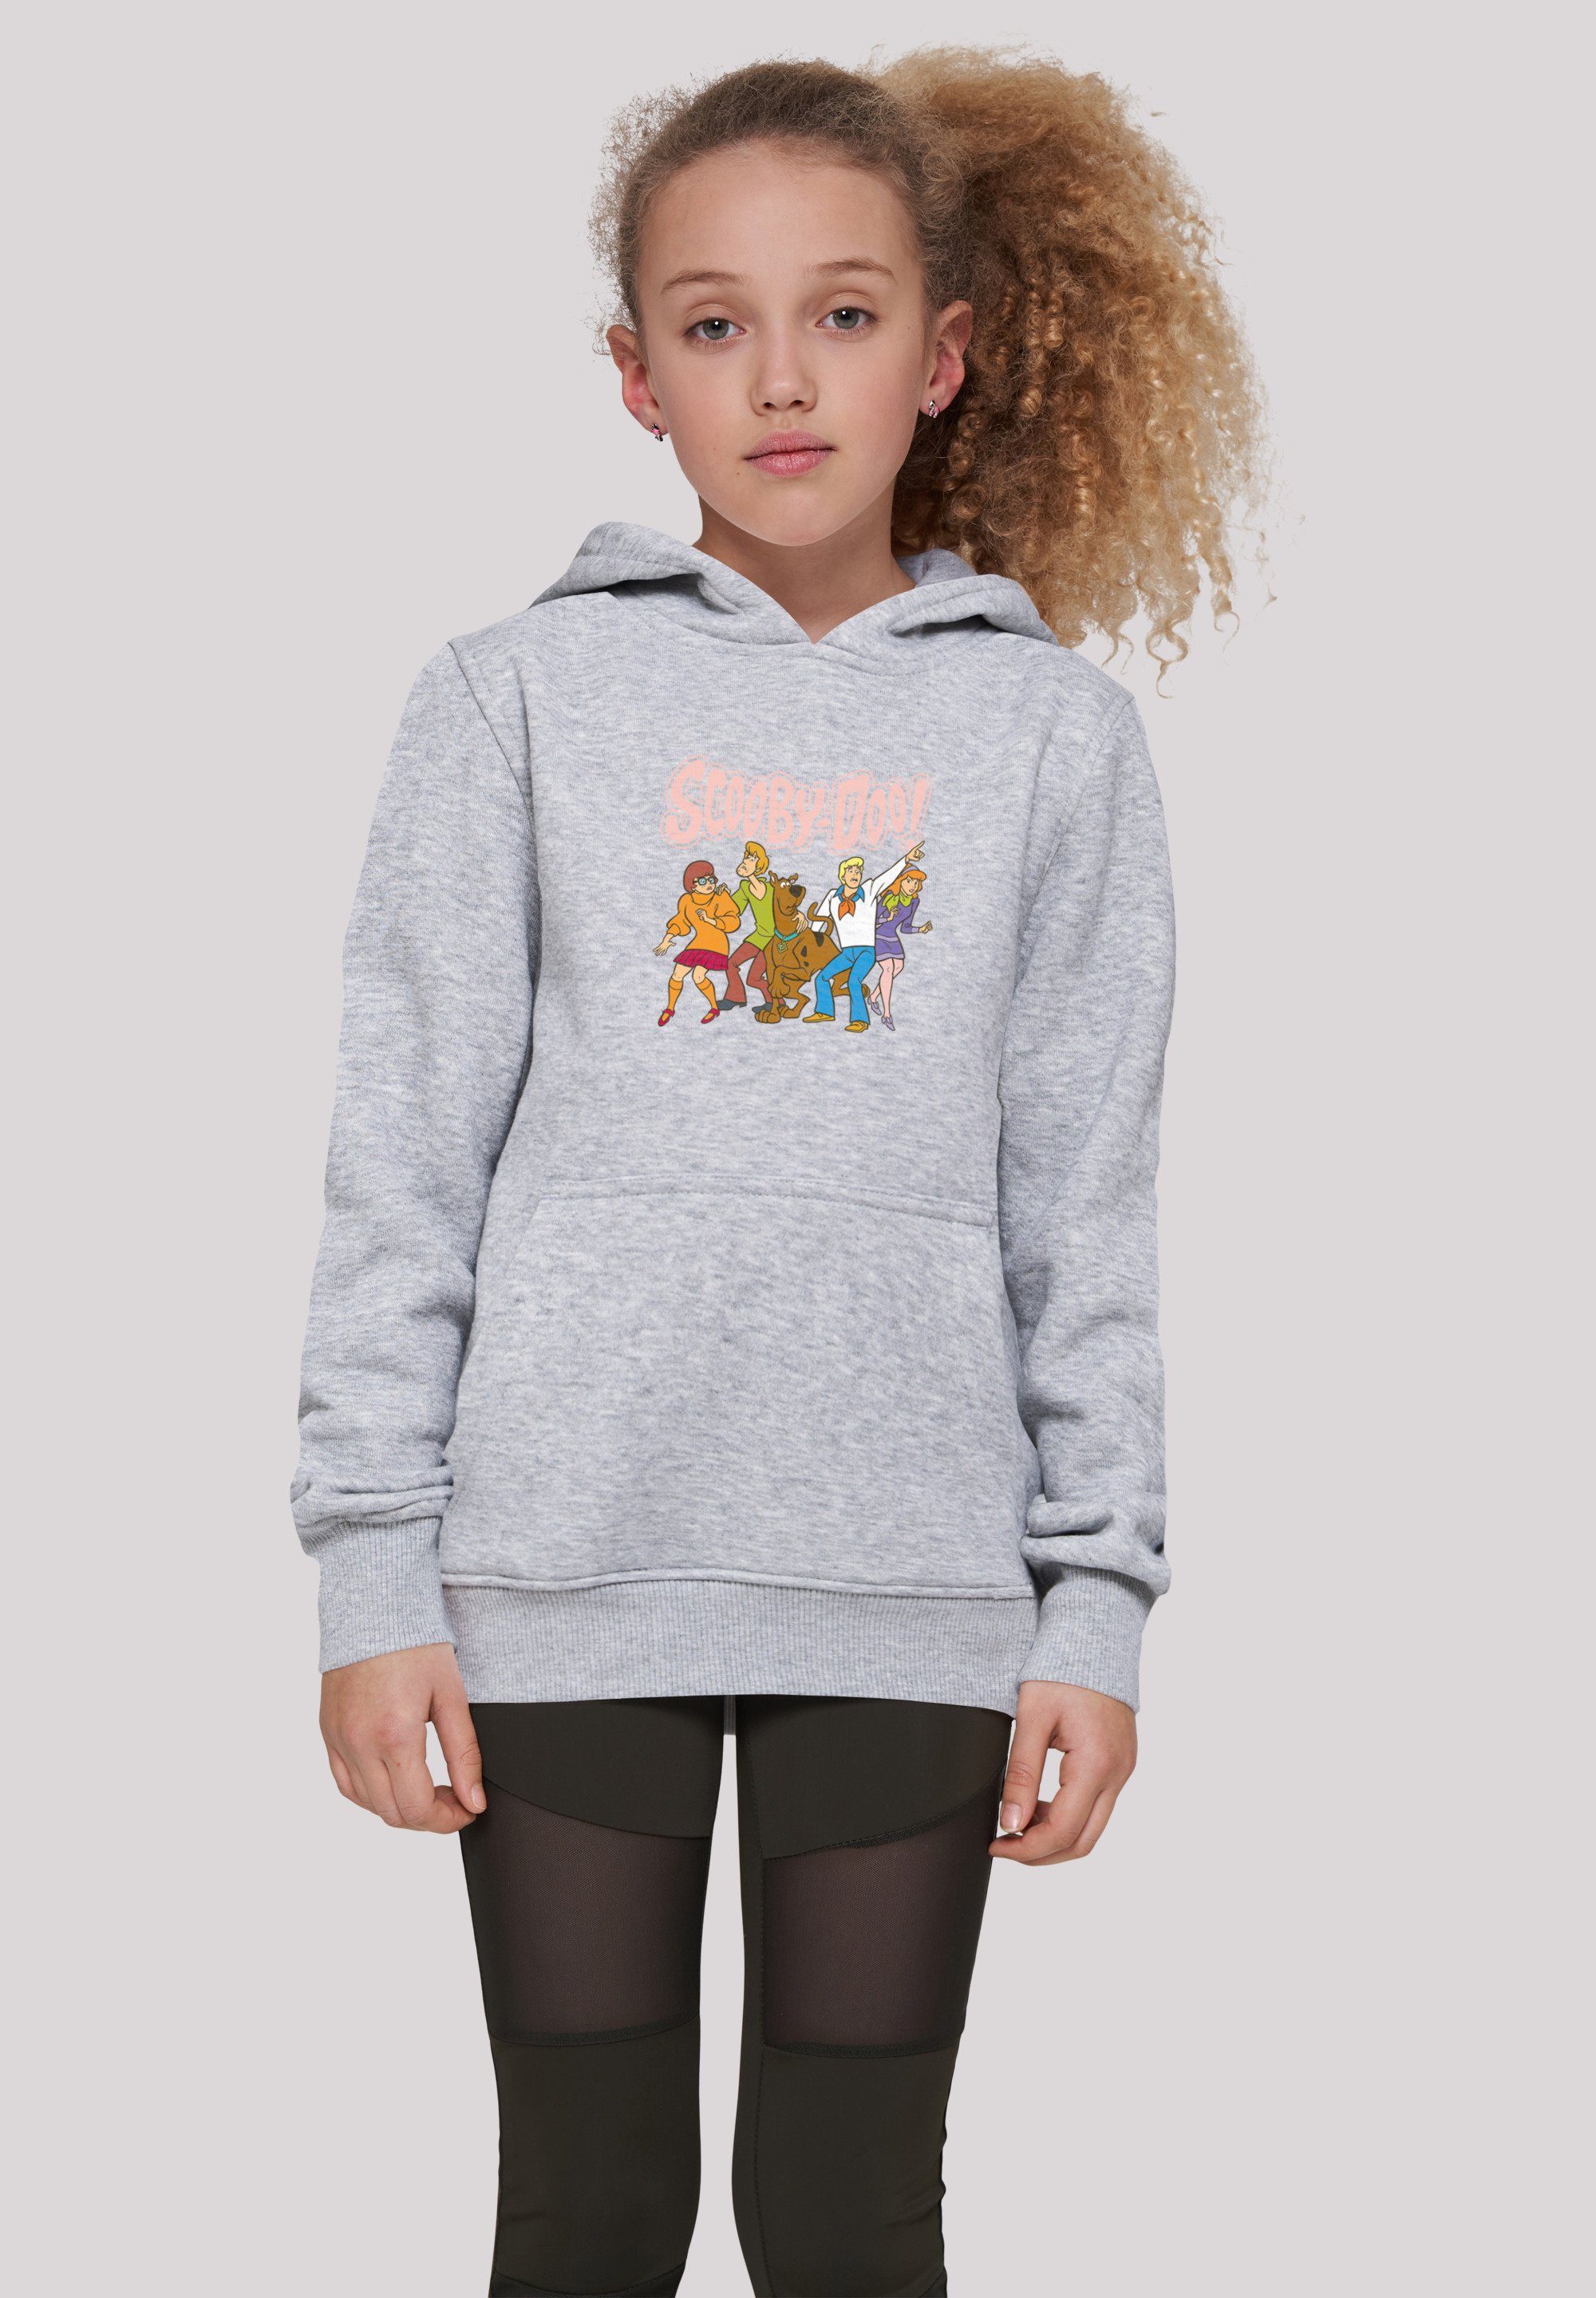 F4NT4STIC Sweatshirt Scooby Doo Classic Group Unisex Kinder,Premium Merch,Jungen,Mädchen,Bedruckt heather grey